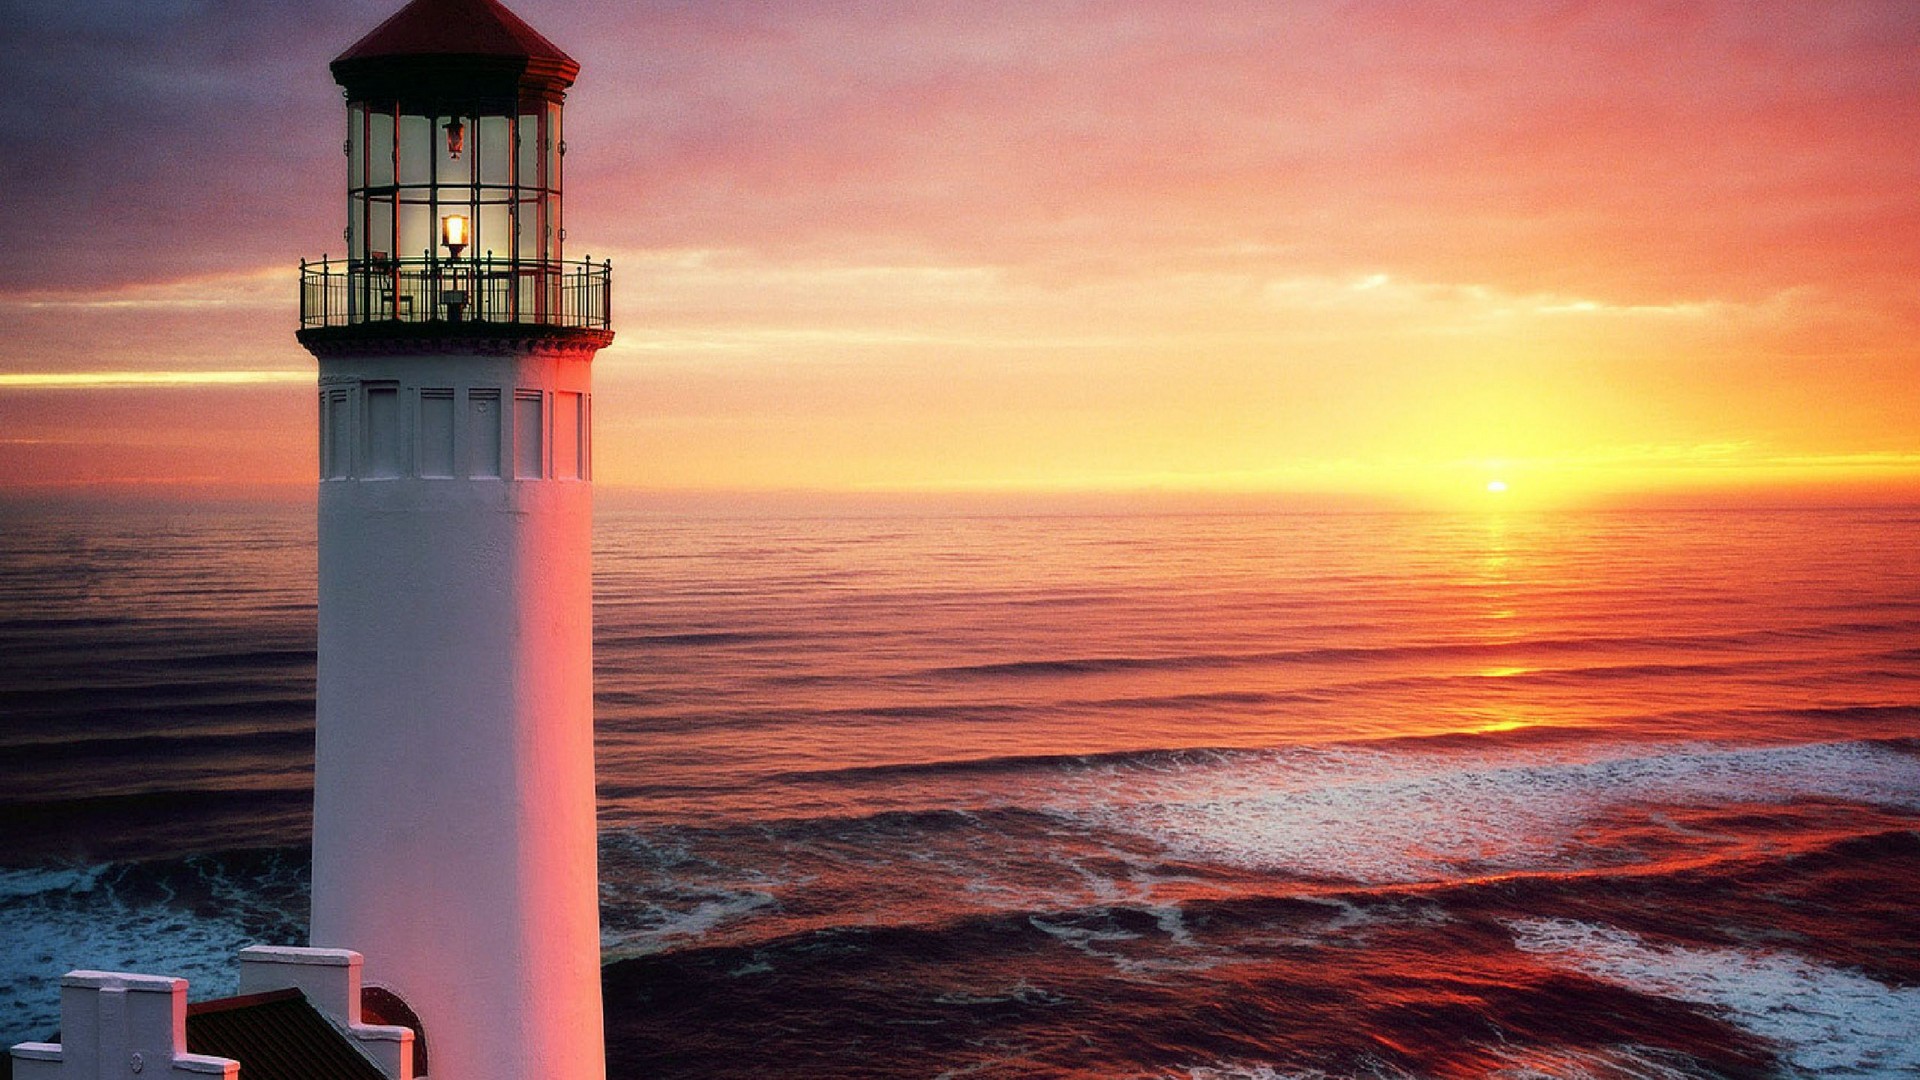 Sunset Desktop Backgrounds With High-resolution Pixel - Beautiful Lighthouse At Sunset - HD Wallpaper 